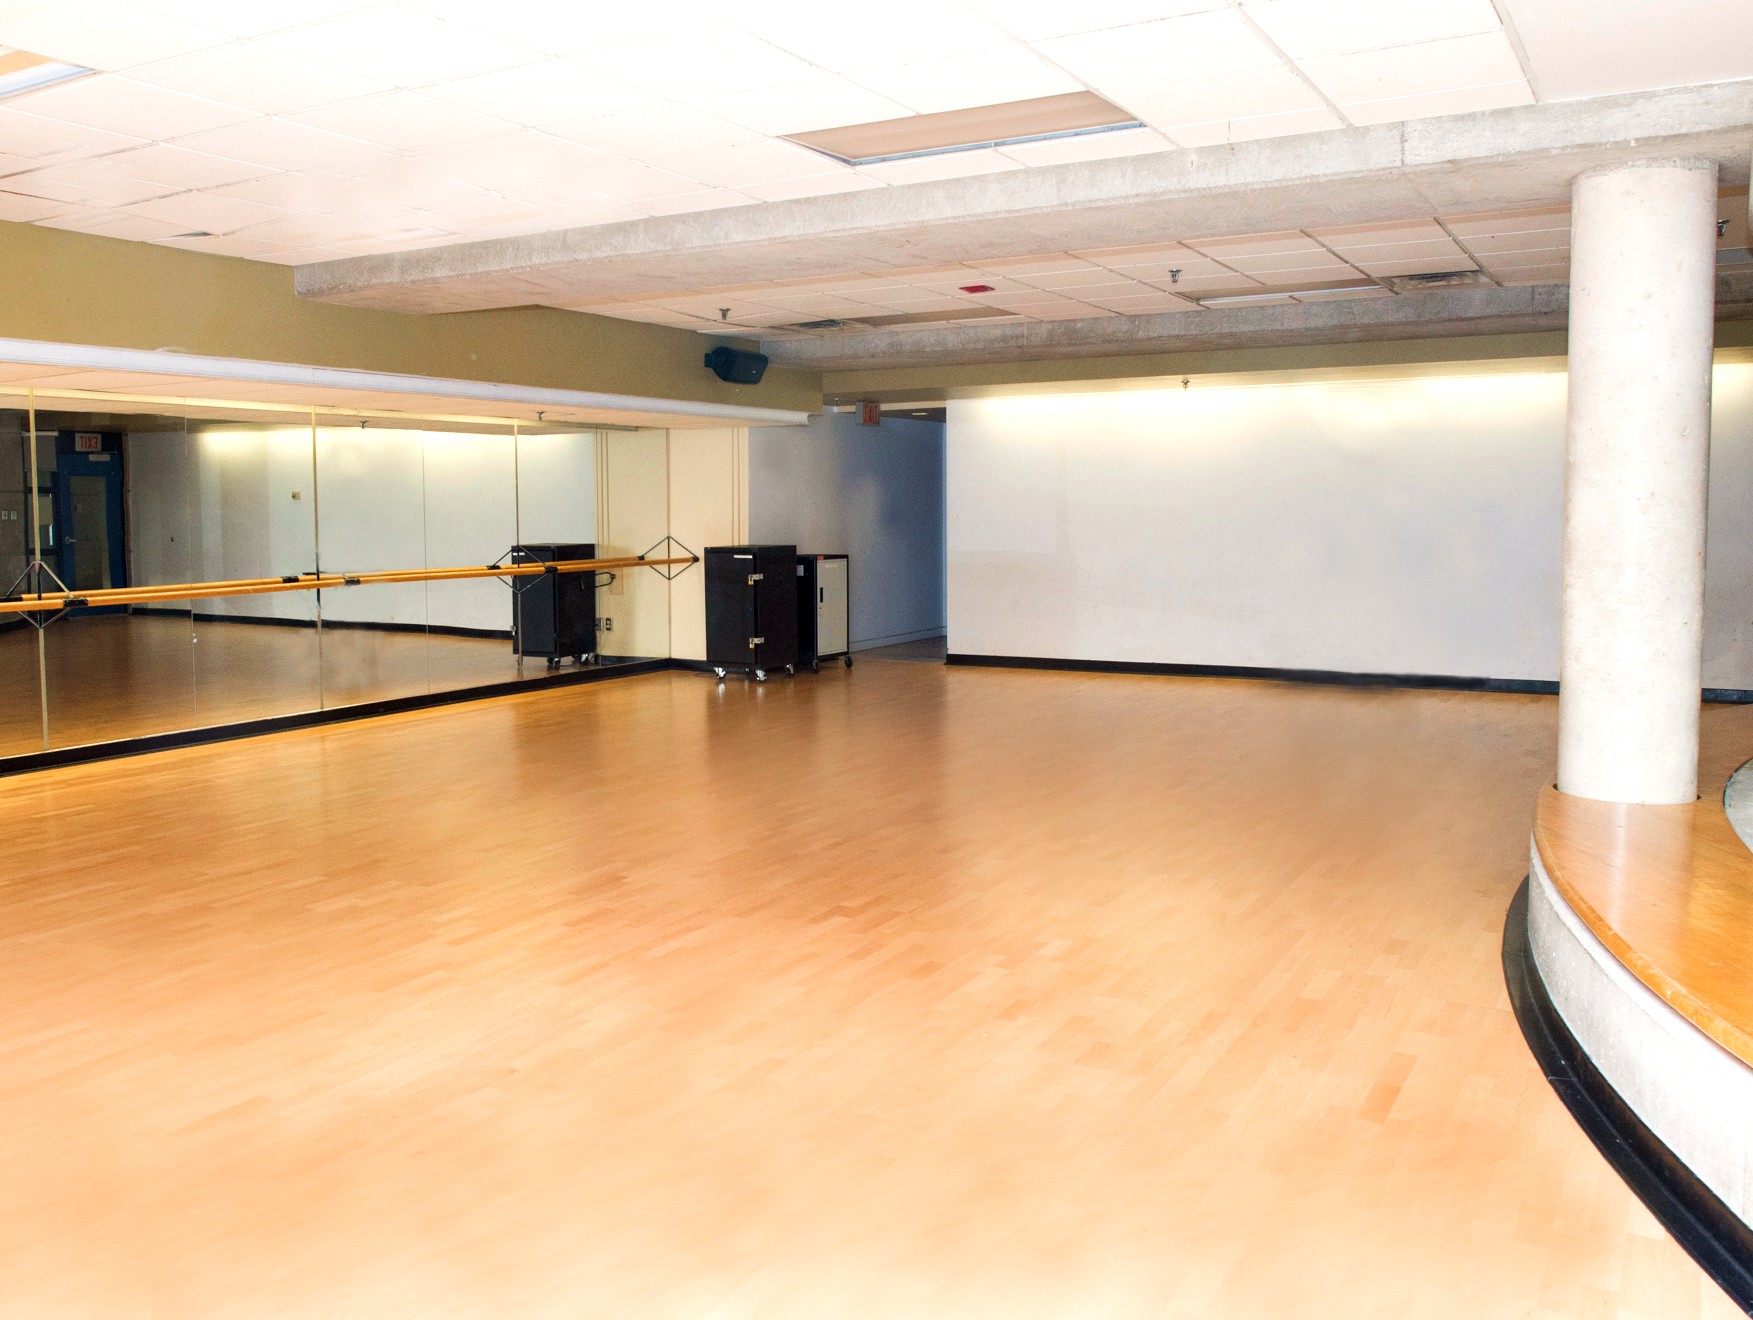 Studio two at RAC, with beautiful sprung hardwood floor. 